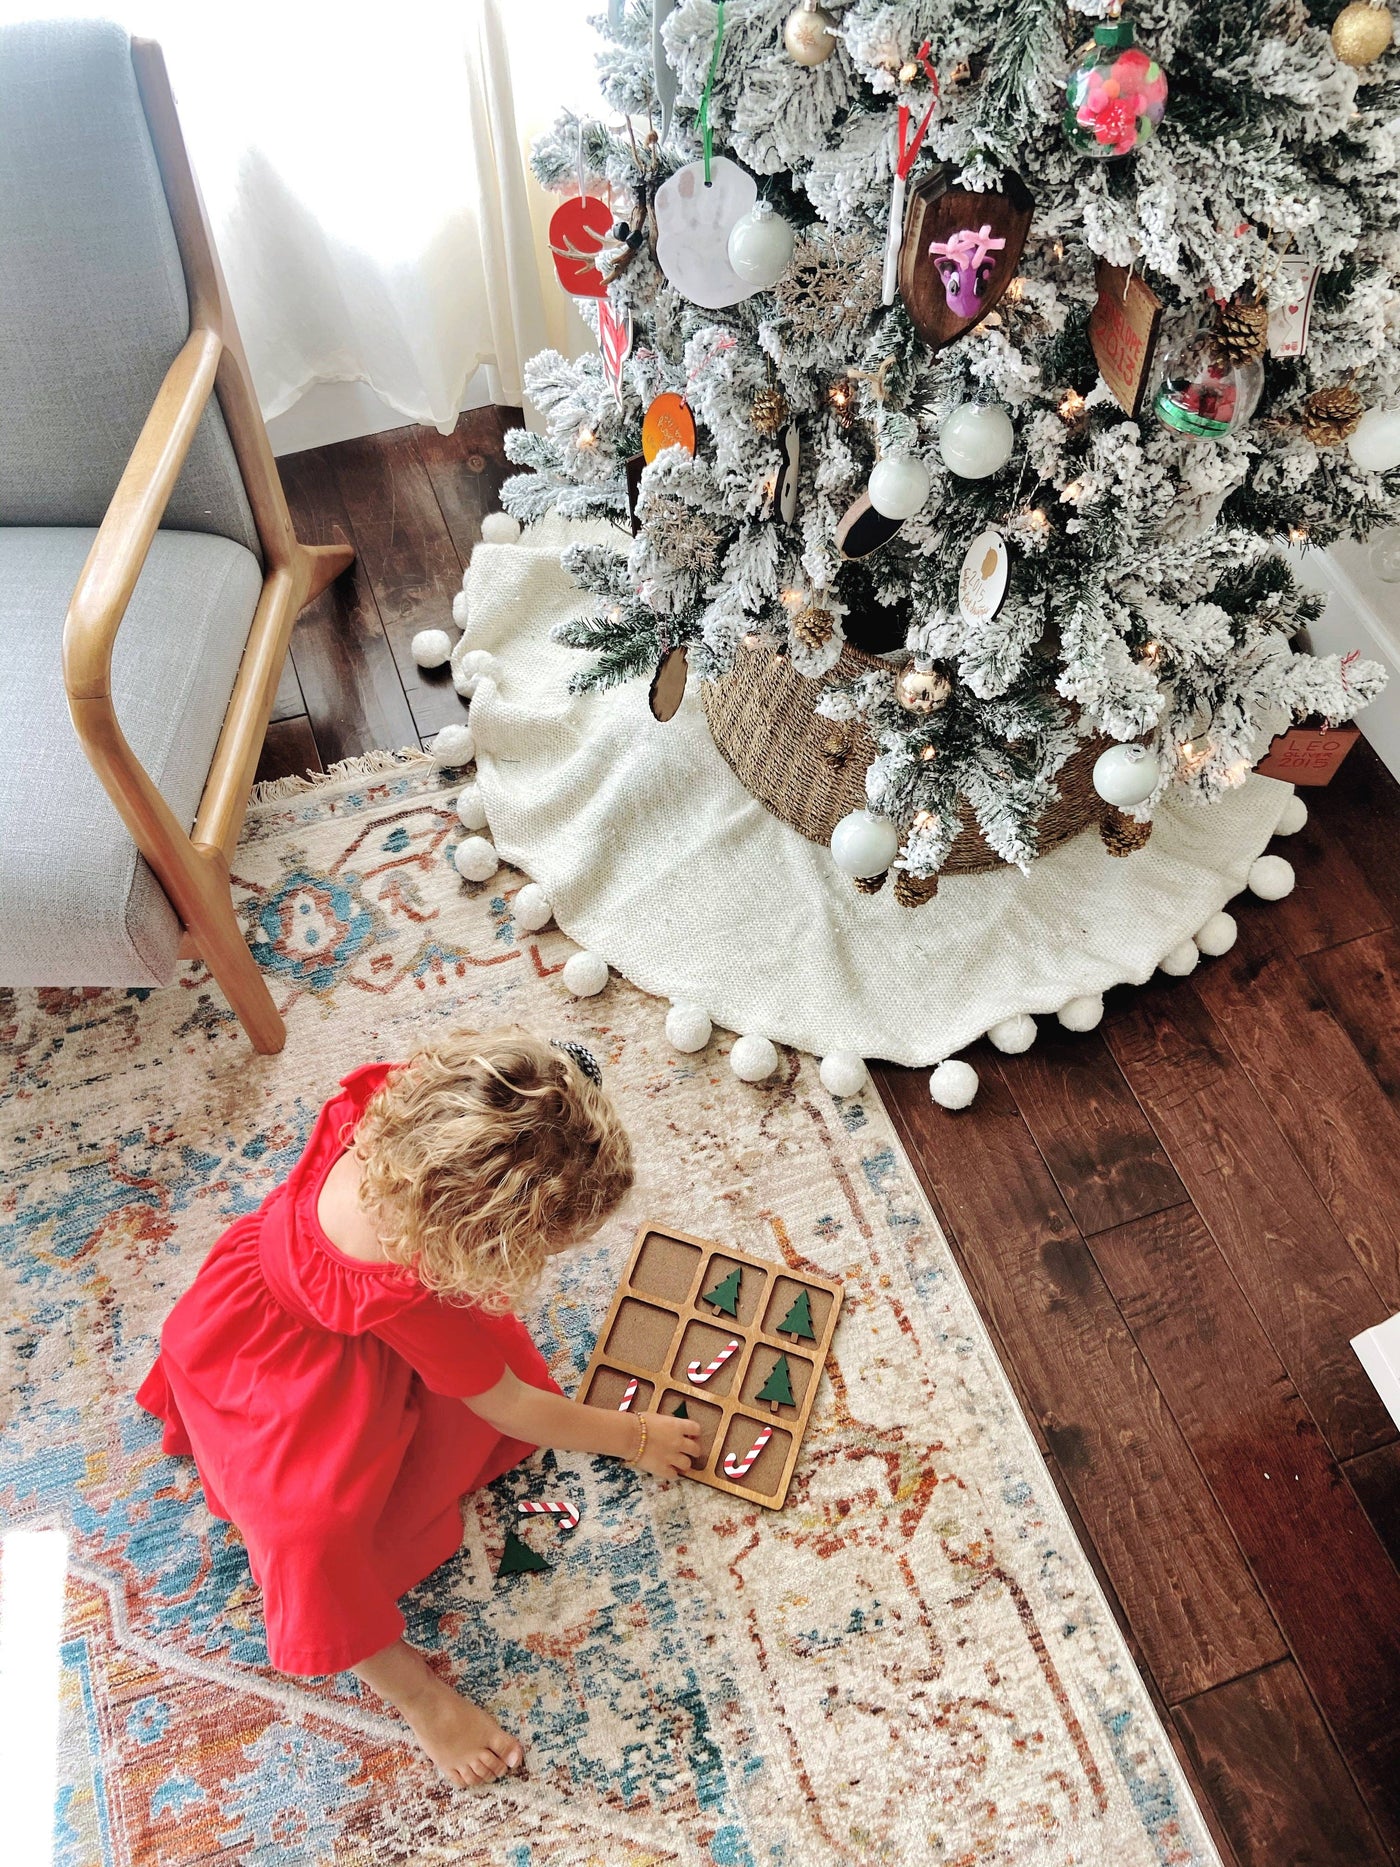 Tic-Tac-Toe Board - Candy Cane vs. Christmas Tree